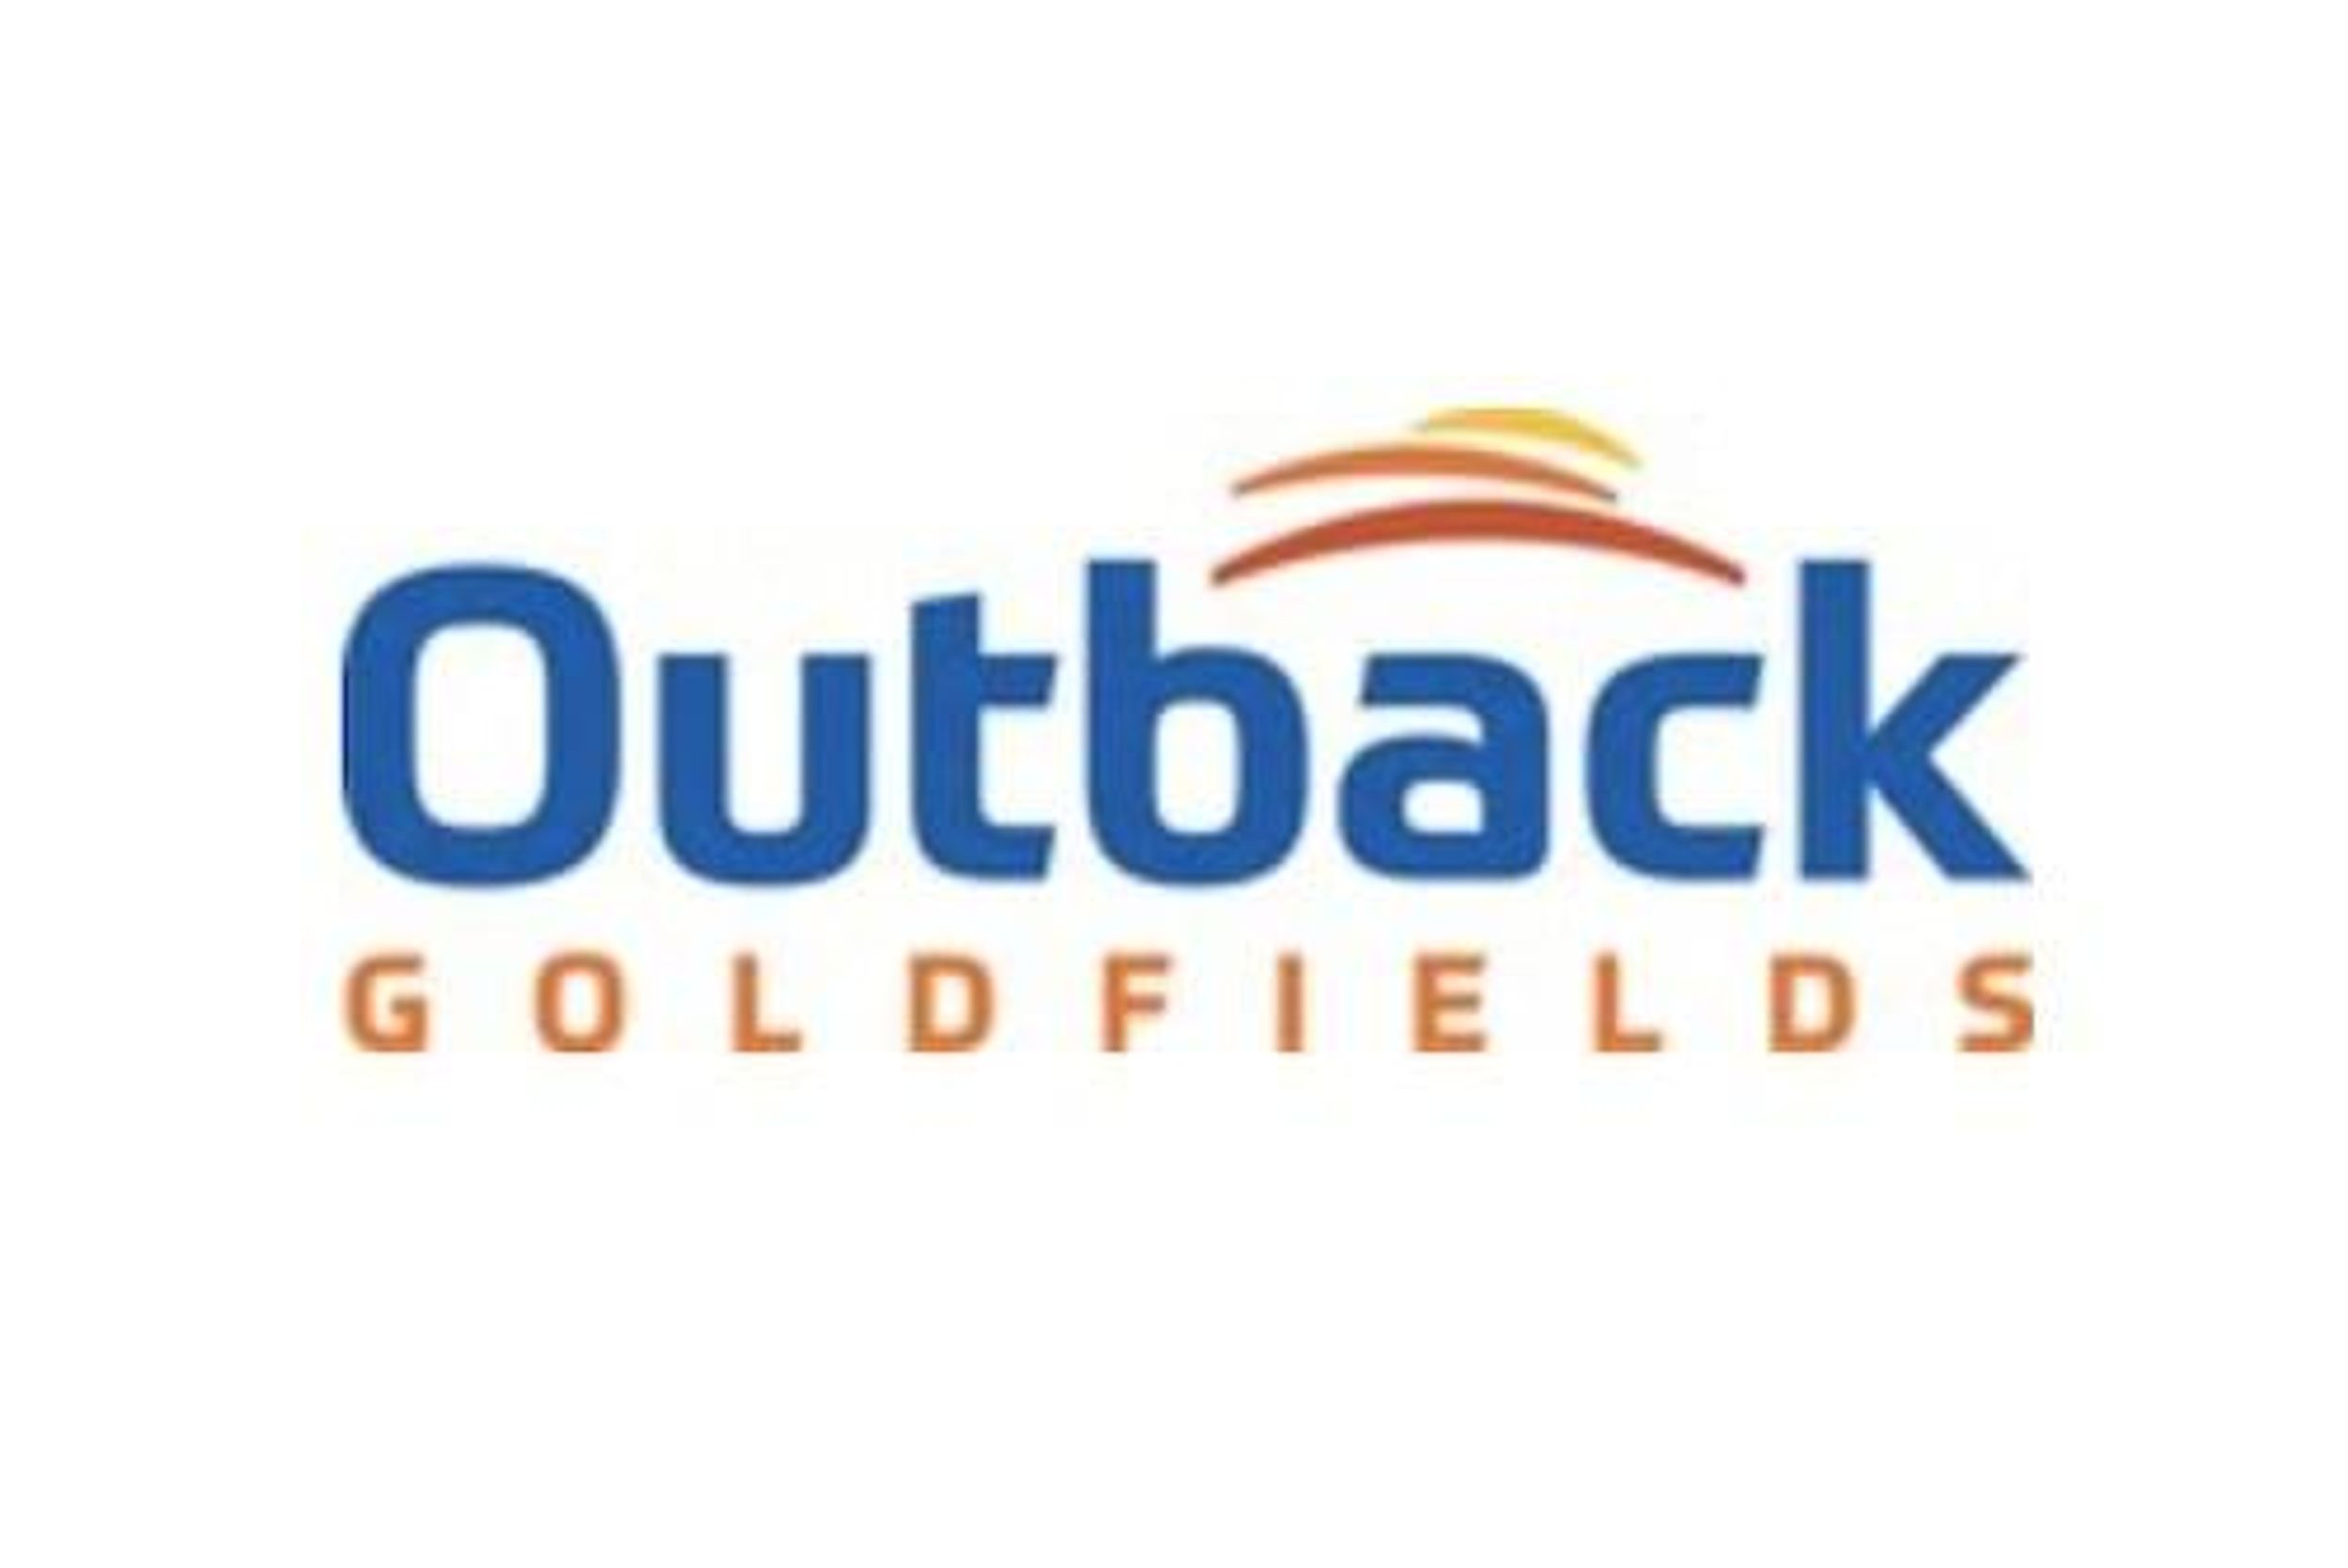 CSE Bulletin: Delist - Outback Goldfields Corp. 